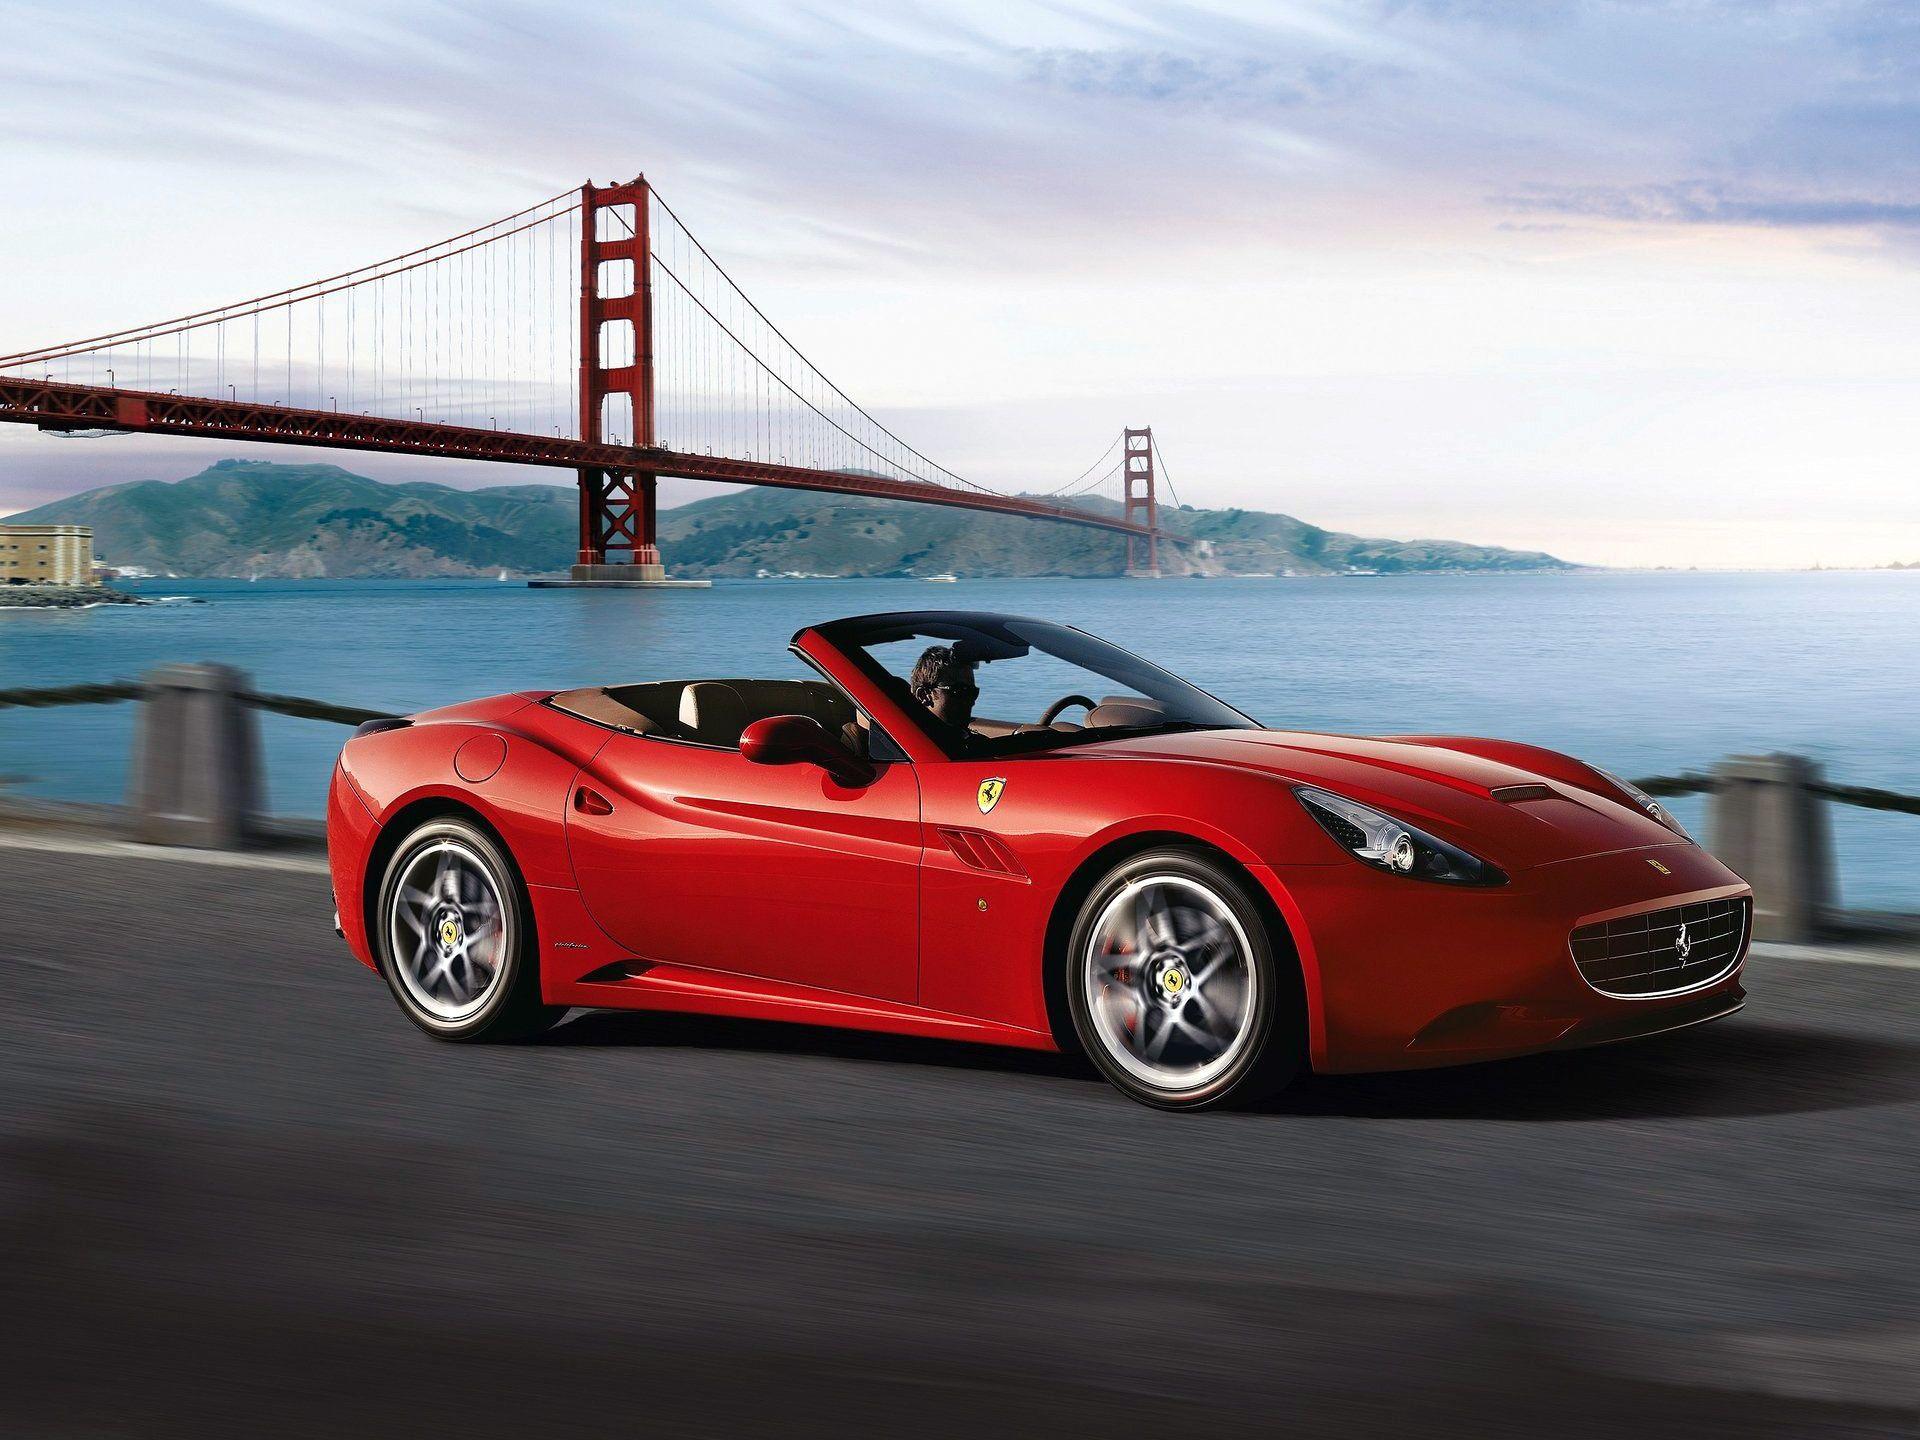 Ferrari California Wallpaper, Picture, Image